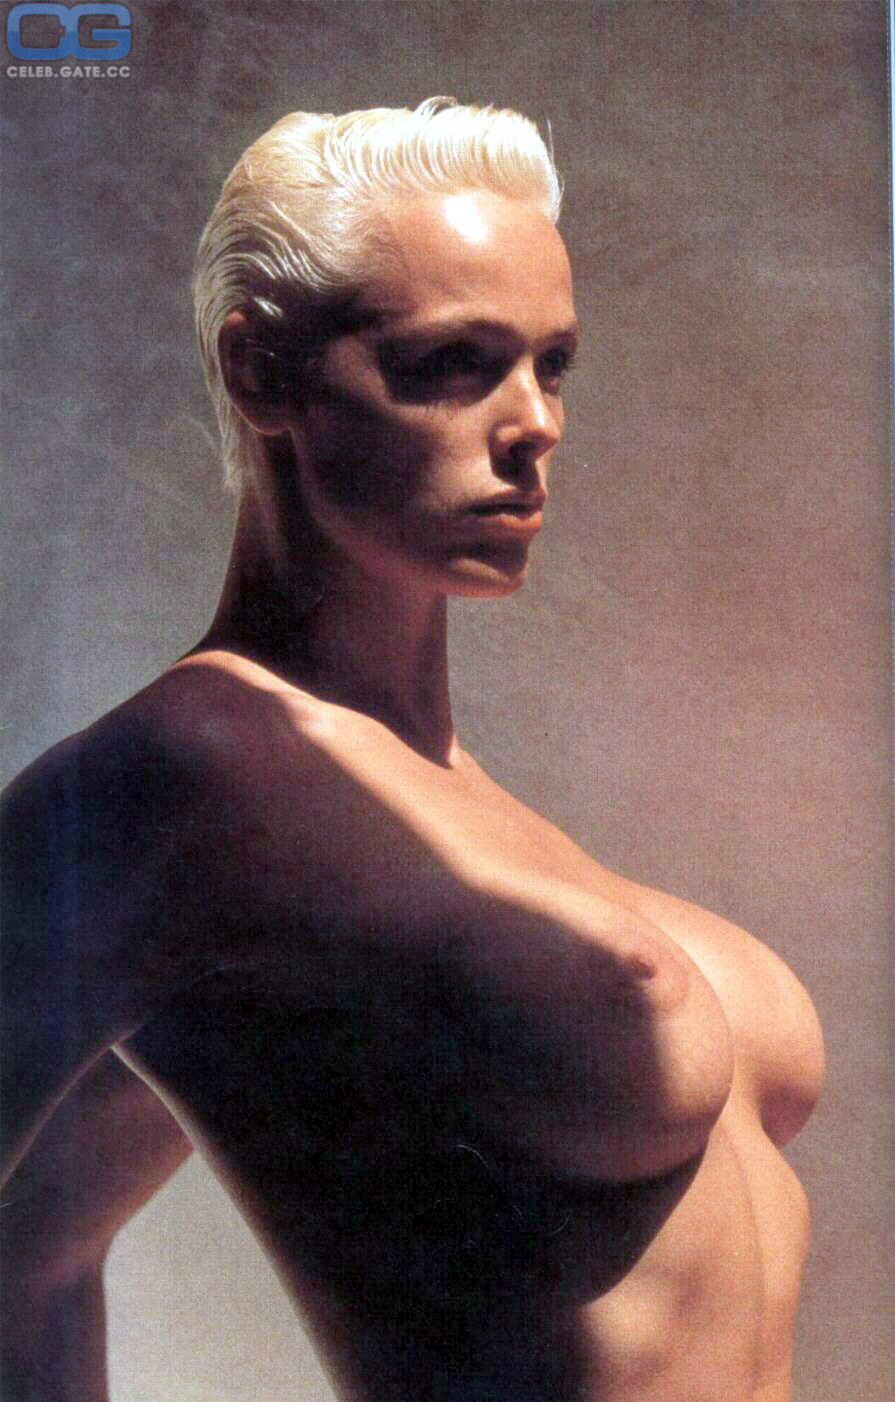 Finest Brigitte Nielsson Nude Pic